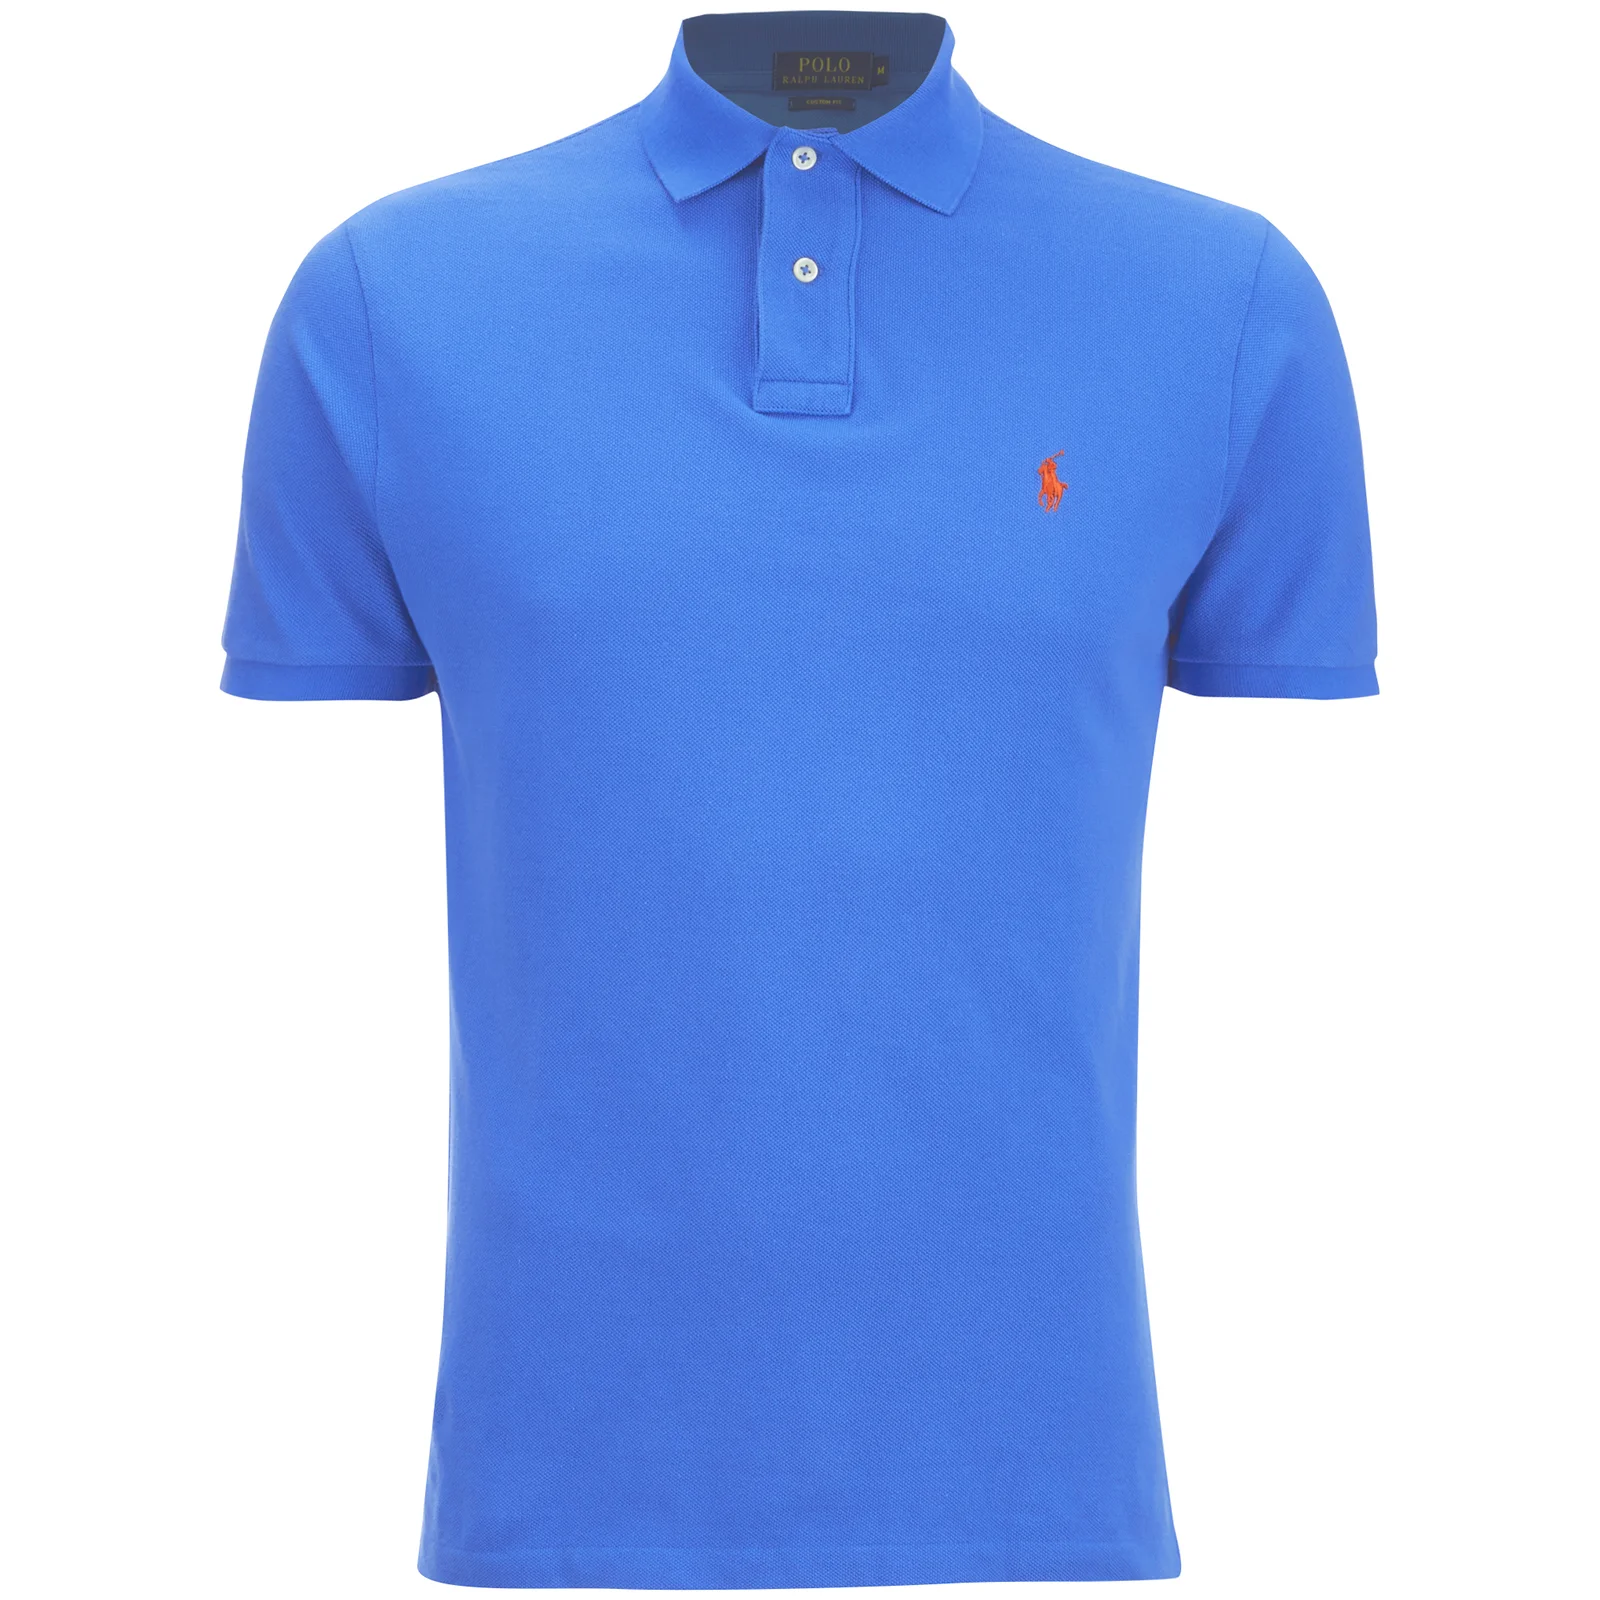 Polo Ralph Lauren Men's Custom Fit Polo Shirt - Cyan Blue Image 1